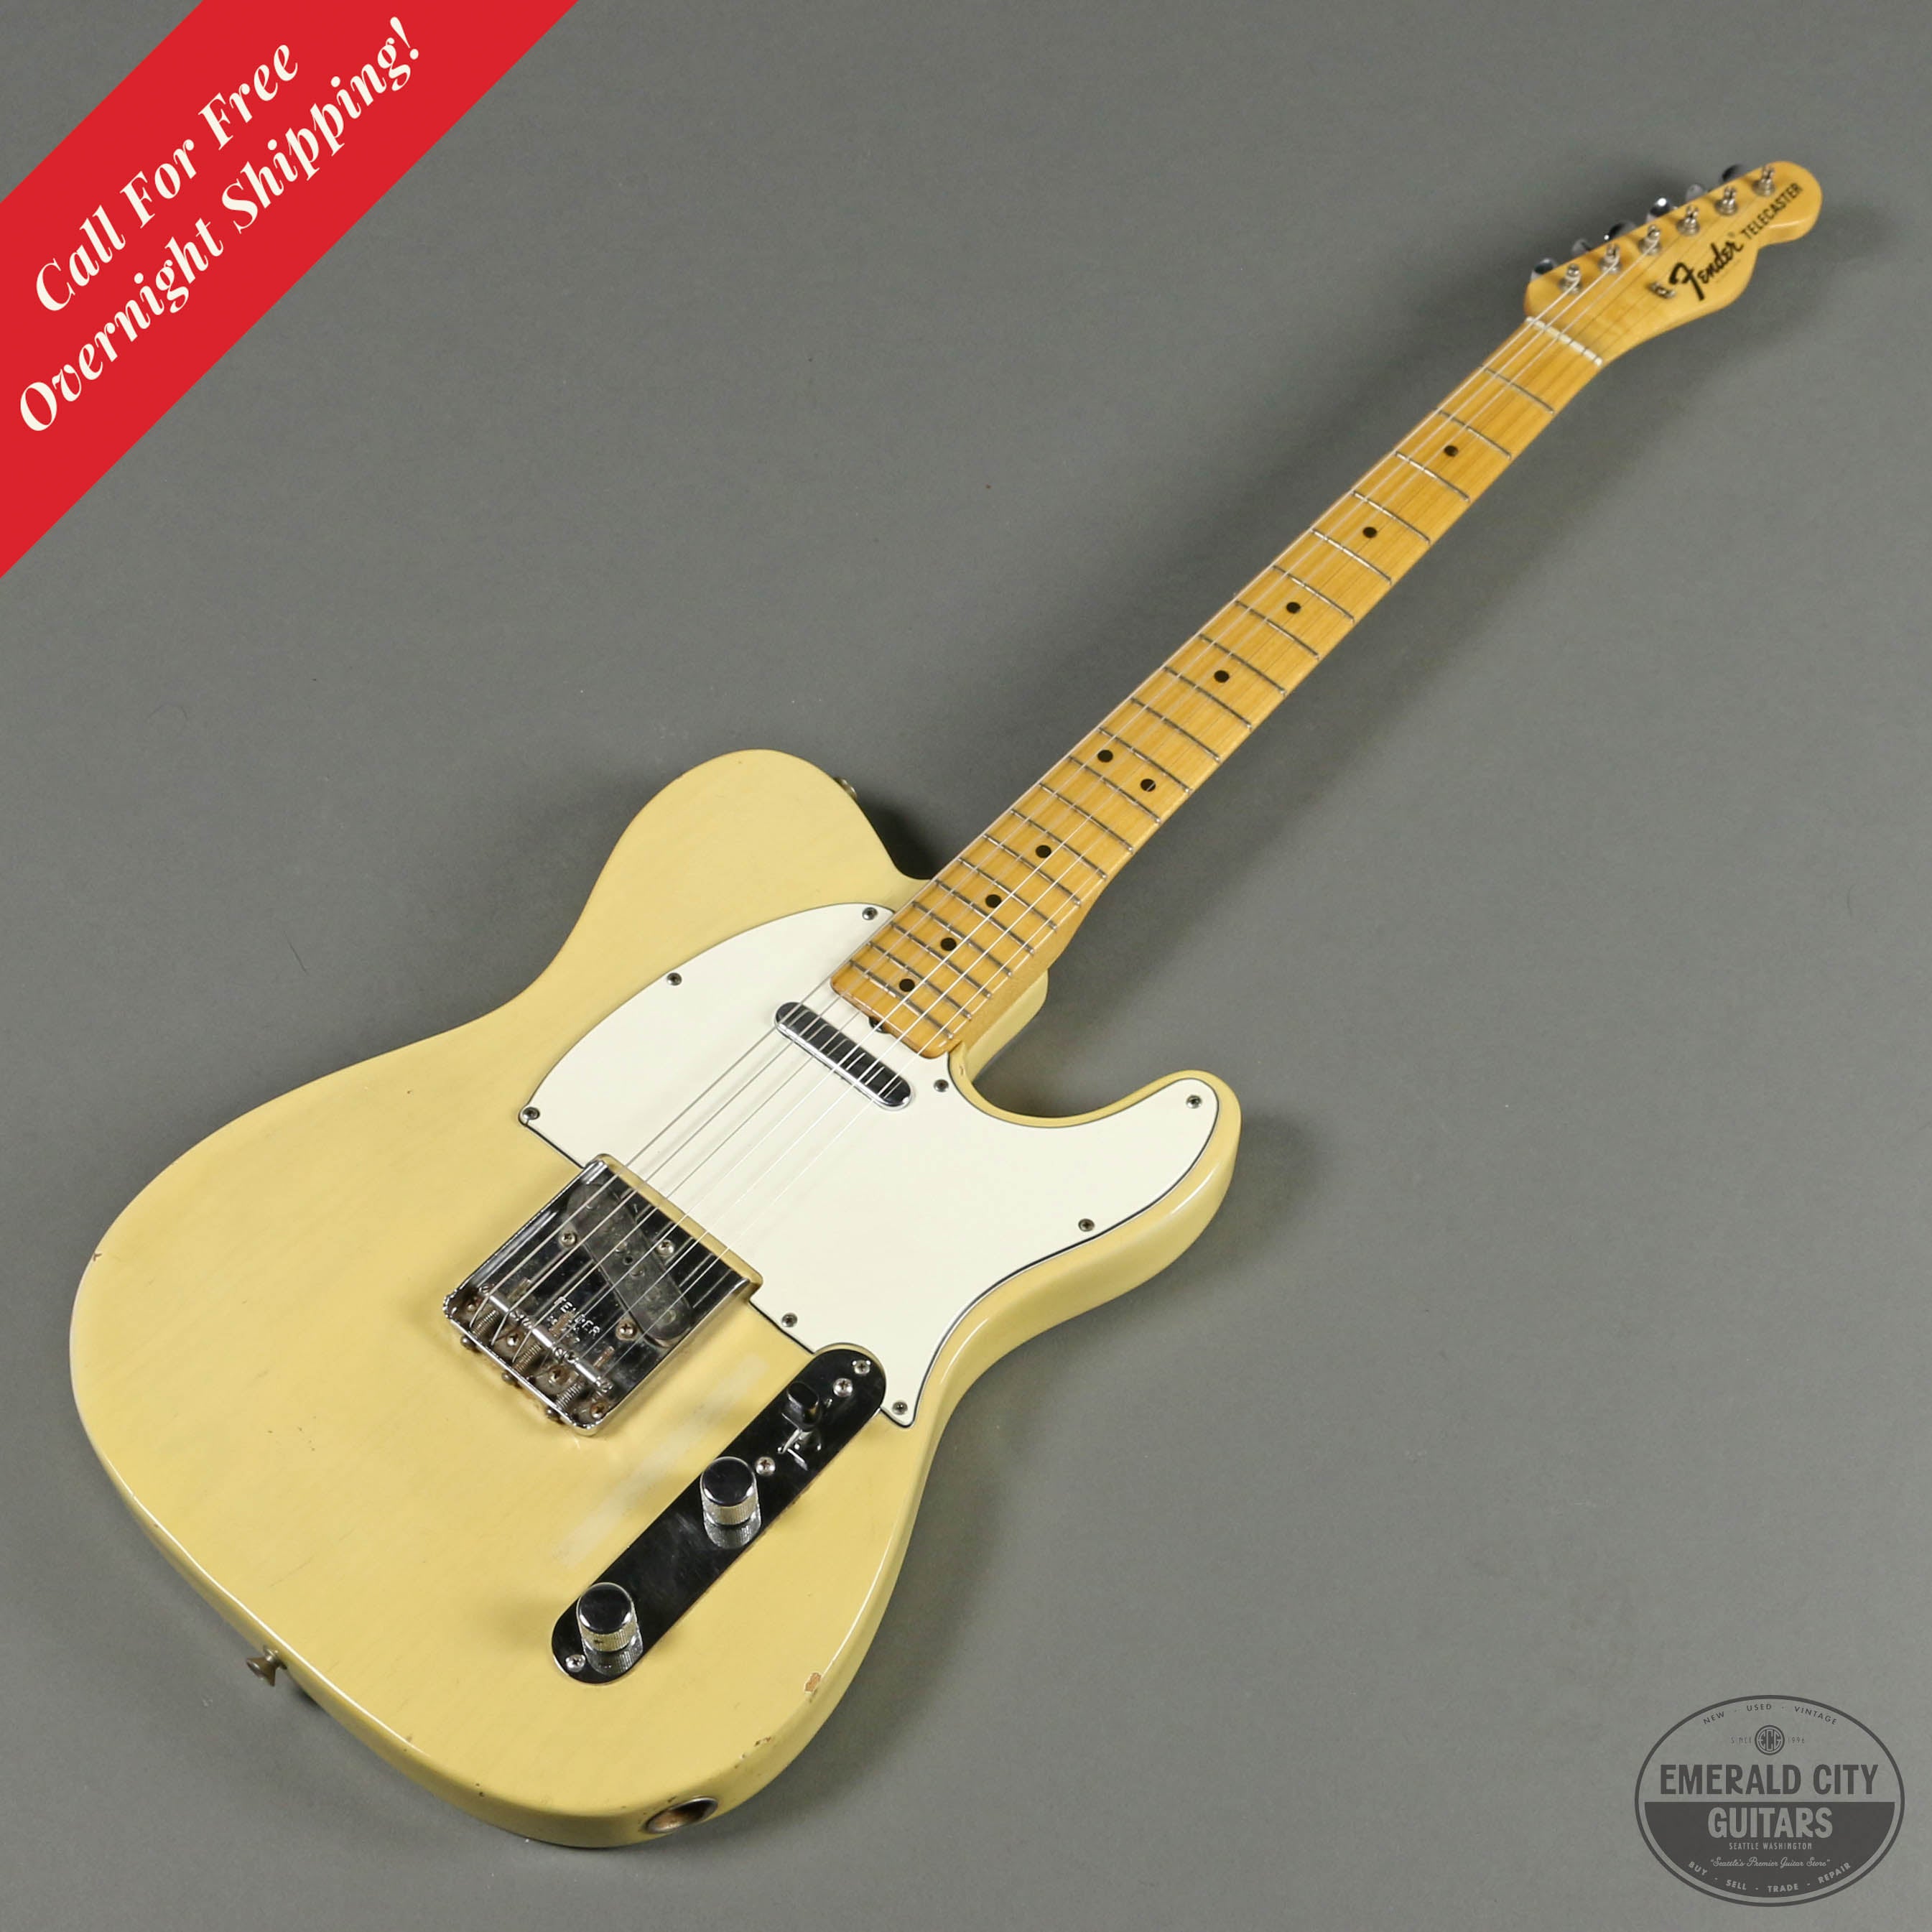 1968 Fender Telecaster – Emerald City Guitars